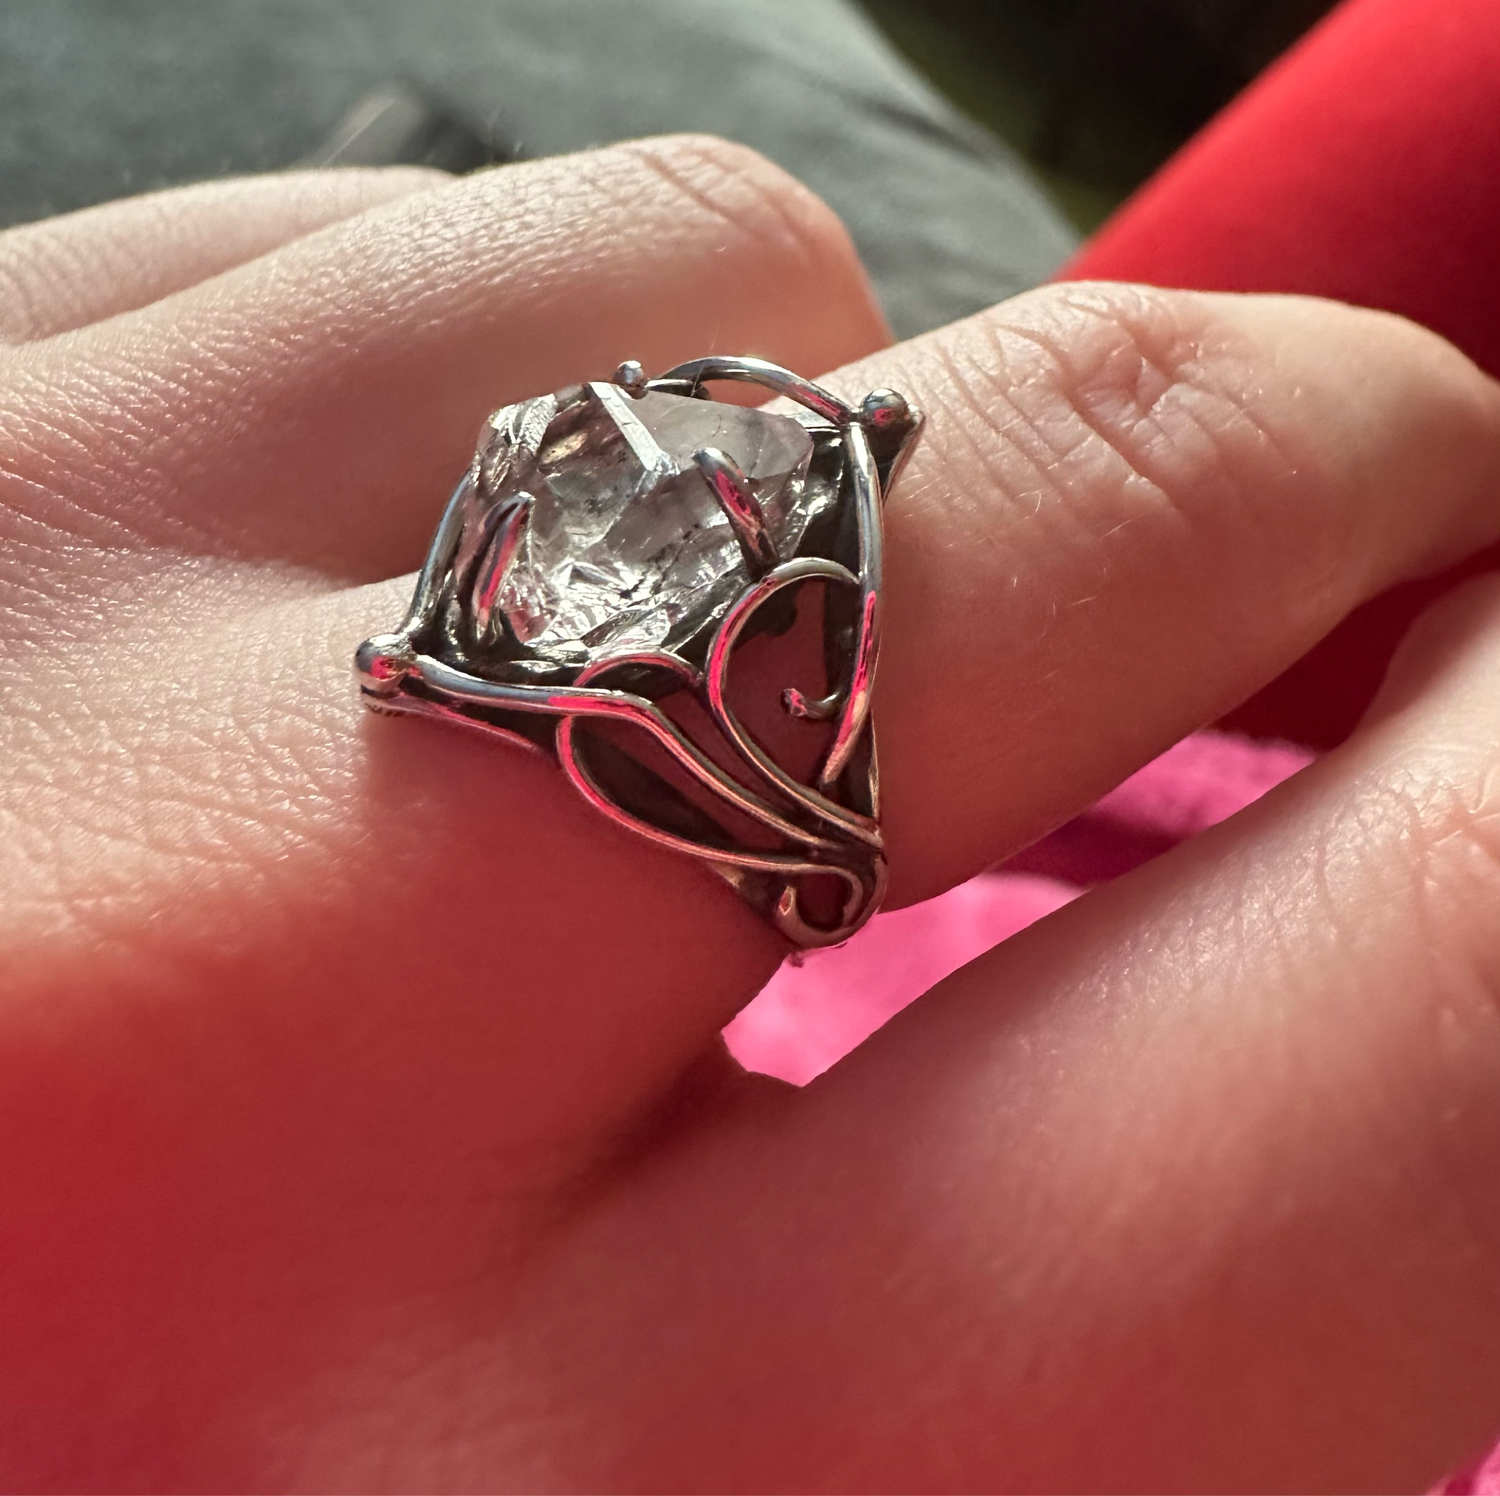 Photo №1 к отзыву покупателя Oksana о товаре Кольцо с херкимерским алмазом Maghella из серебра, кольцо с кристаллом